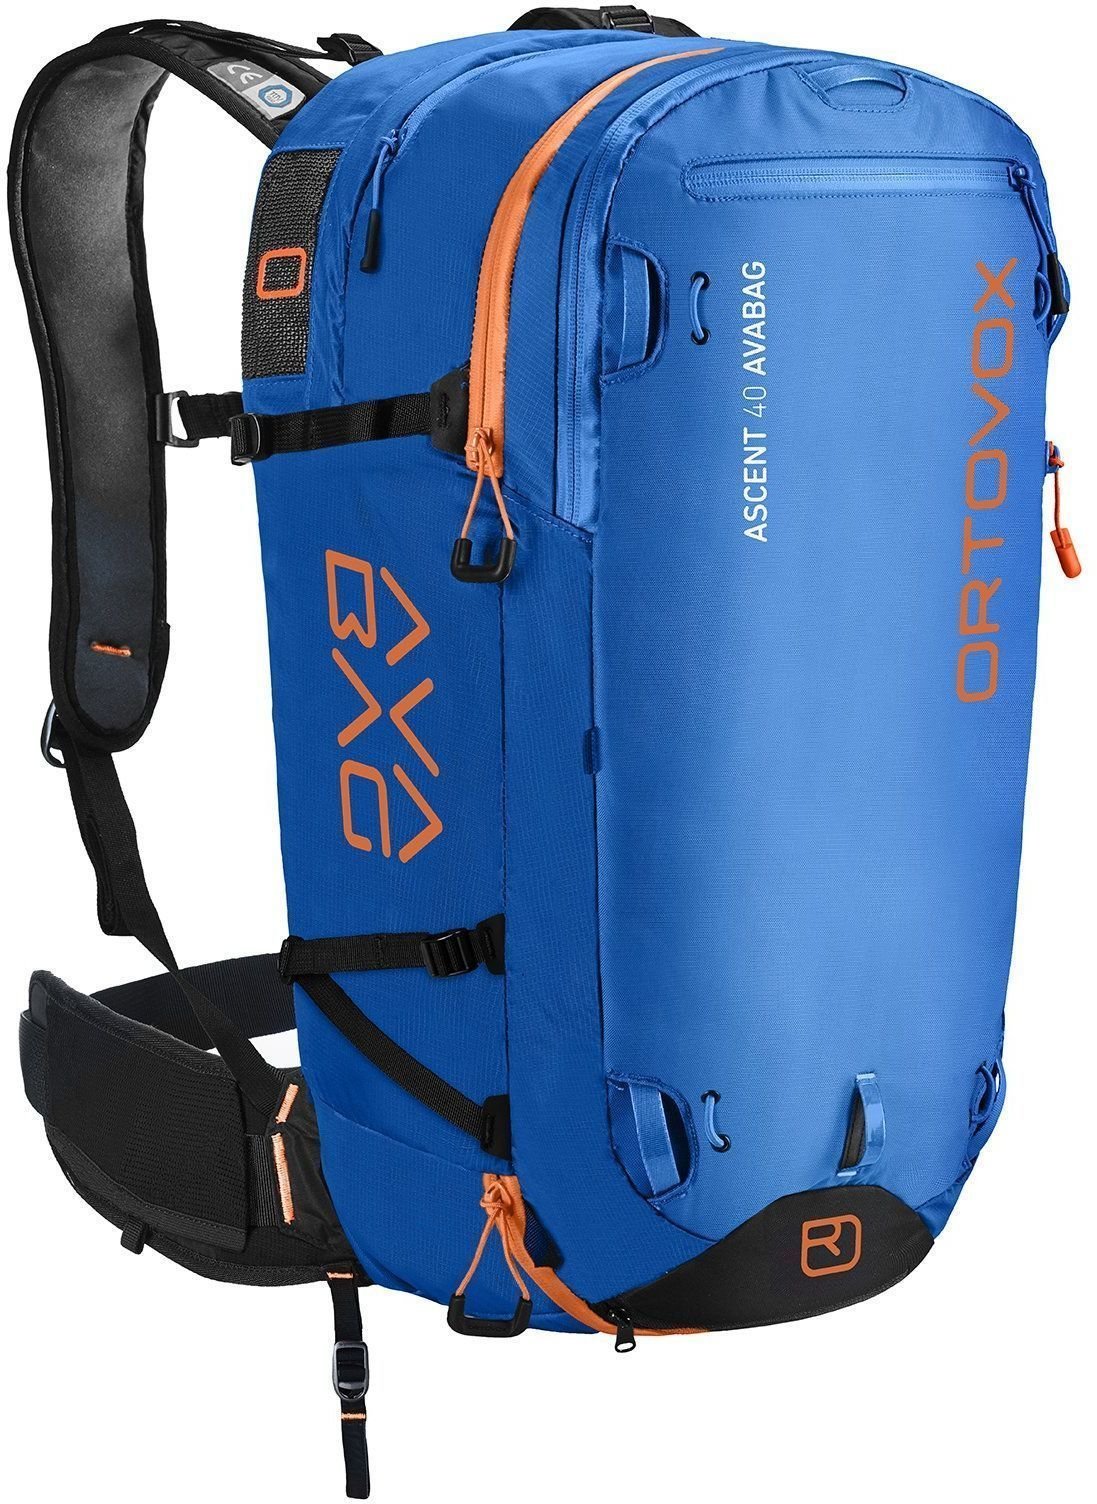 Ski Travel Bag Ortovox Ascent 40 Avabag Safety Blue Ski Travel Bag